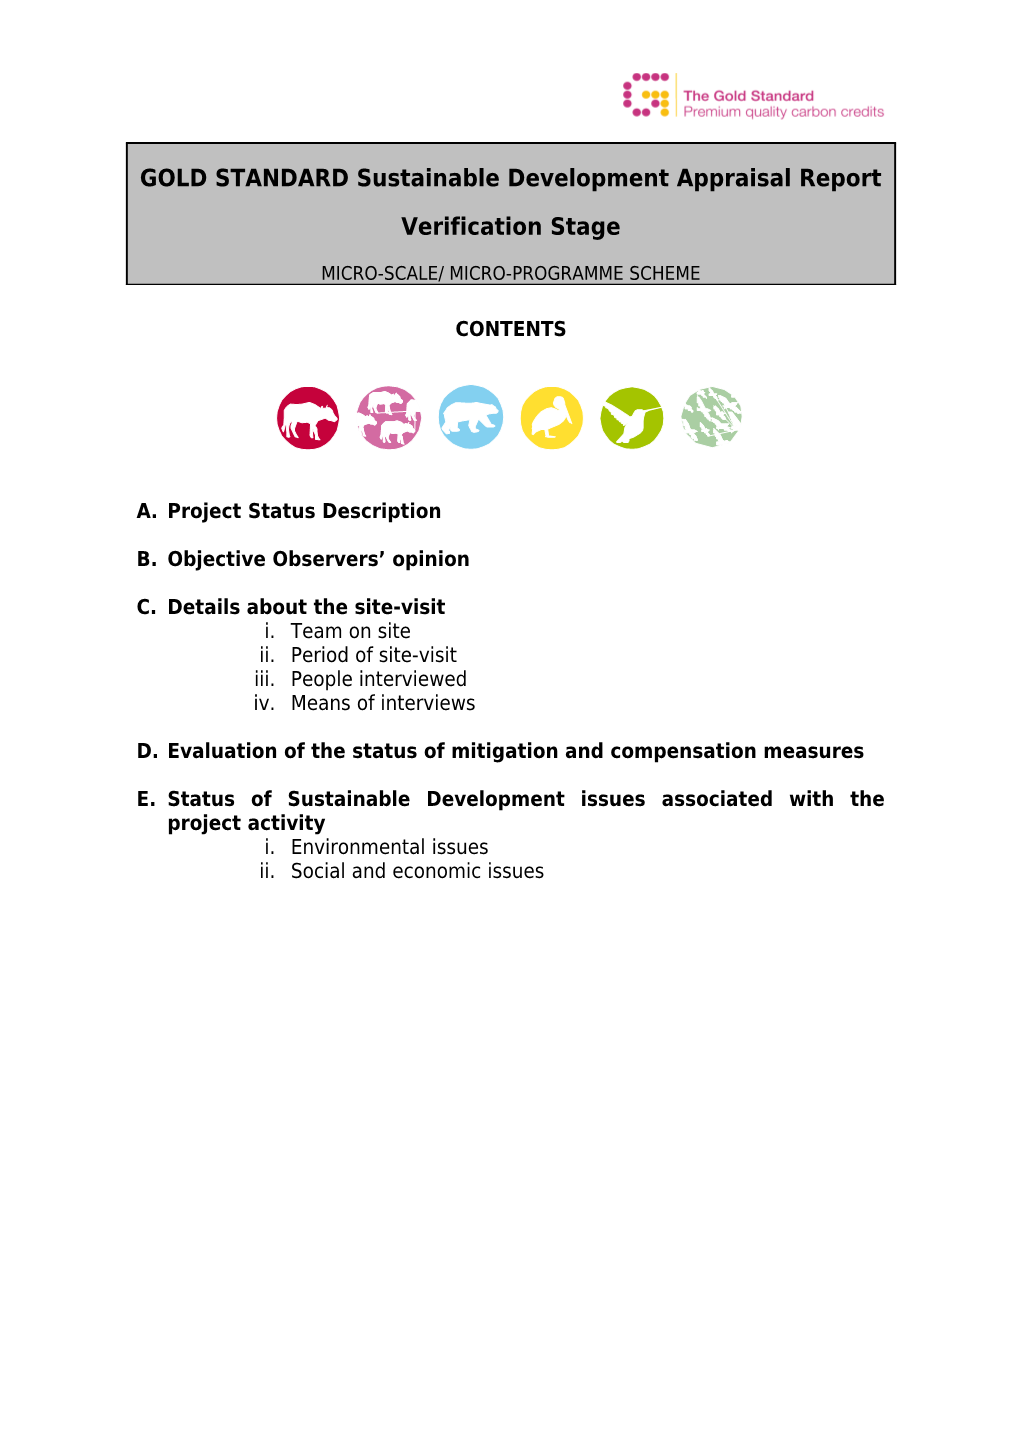 Clean Development Mechanism Project Design Document Form (CDM-PDD). (Version 03.2)